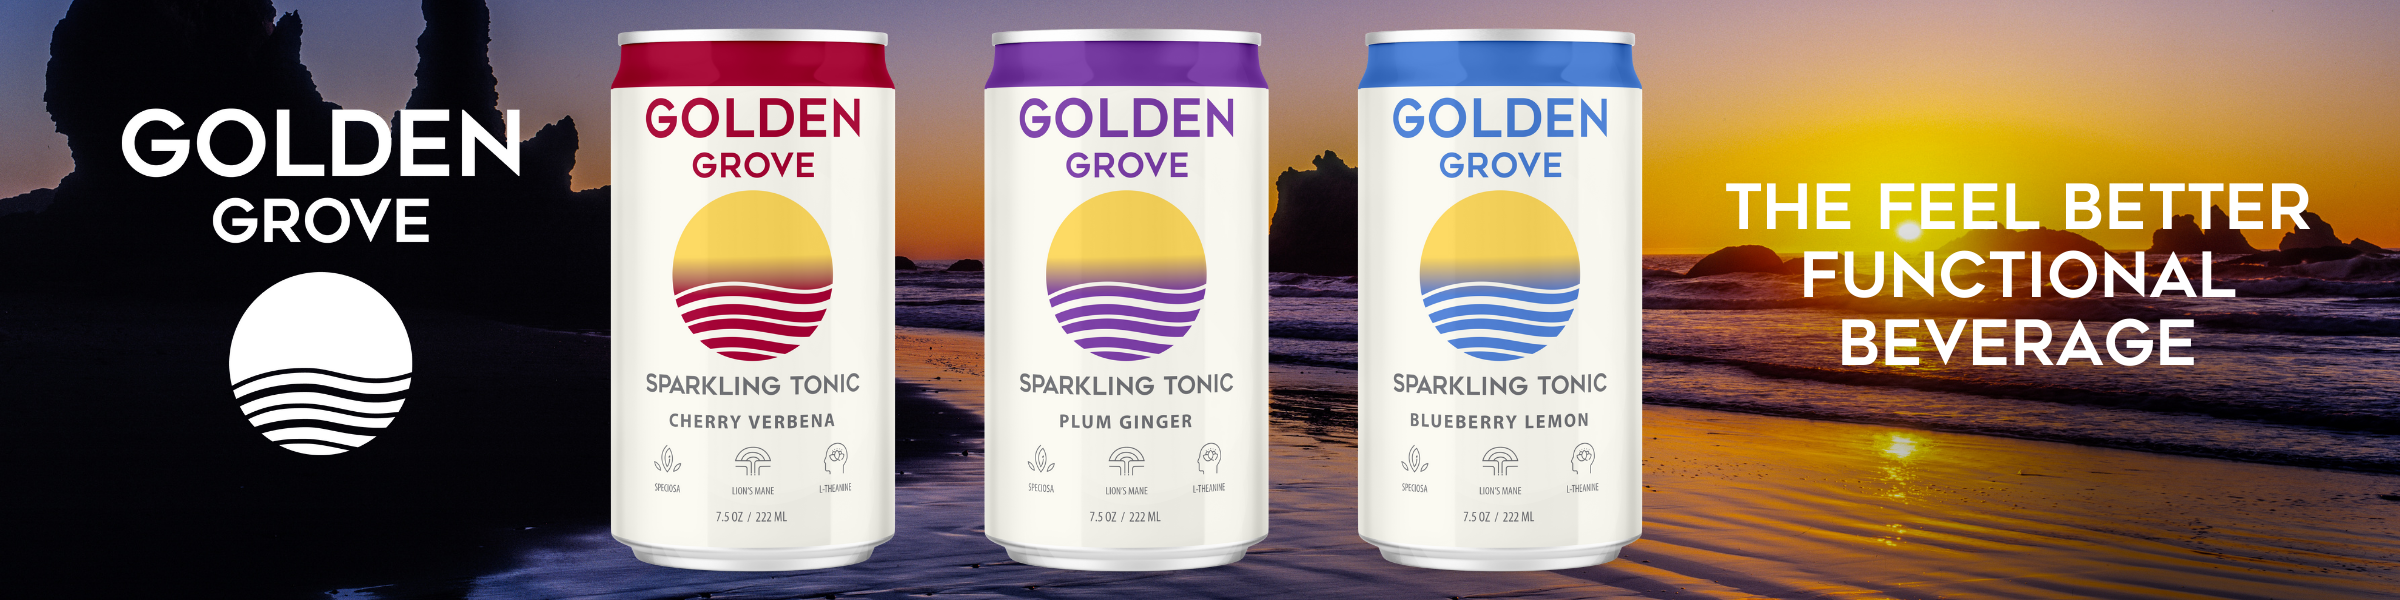 Golden Grove Sparkling Tonic. Make your day golden!